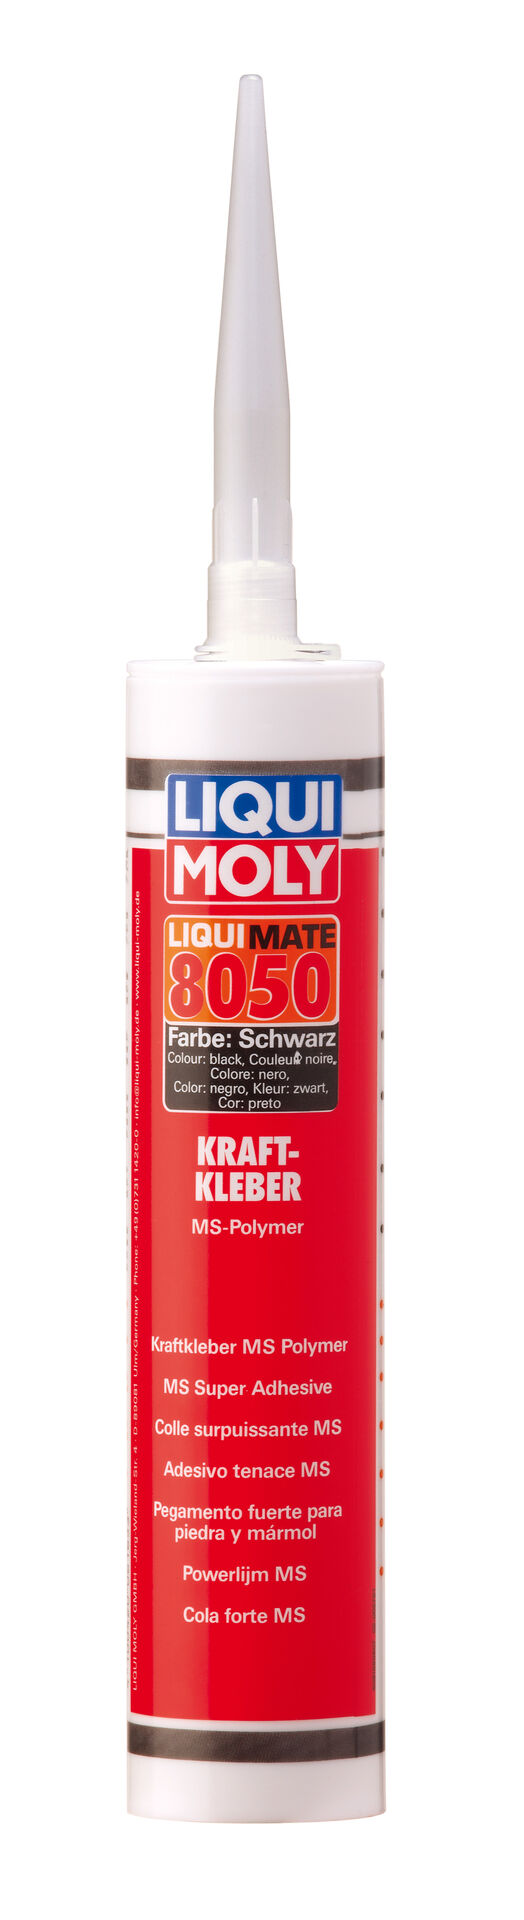 Liqui Moly Liquimate Kraftkleber 8050 MS Klebstoff Kartusche Kleber 290 ml